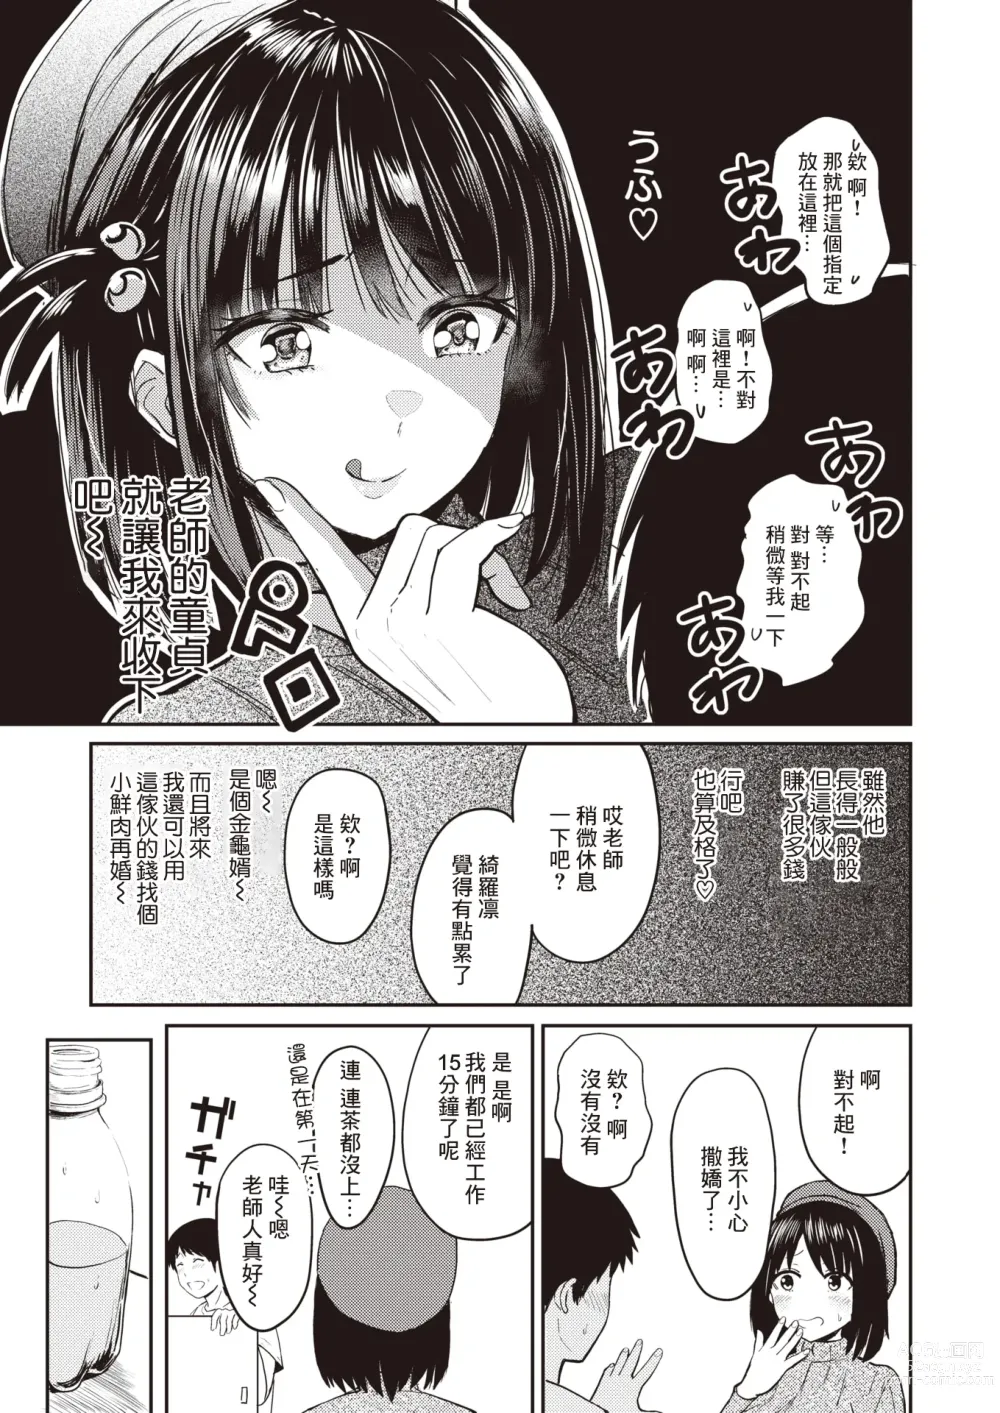 Page 5 of manga Bannou-gata!? Assistant